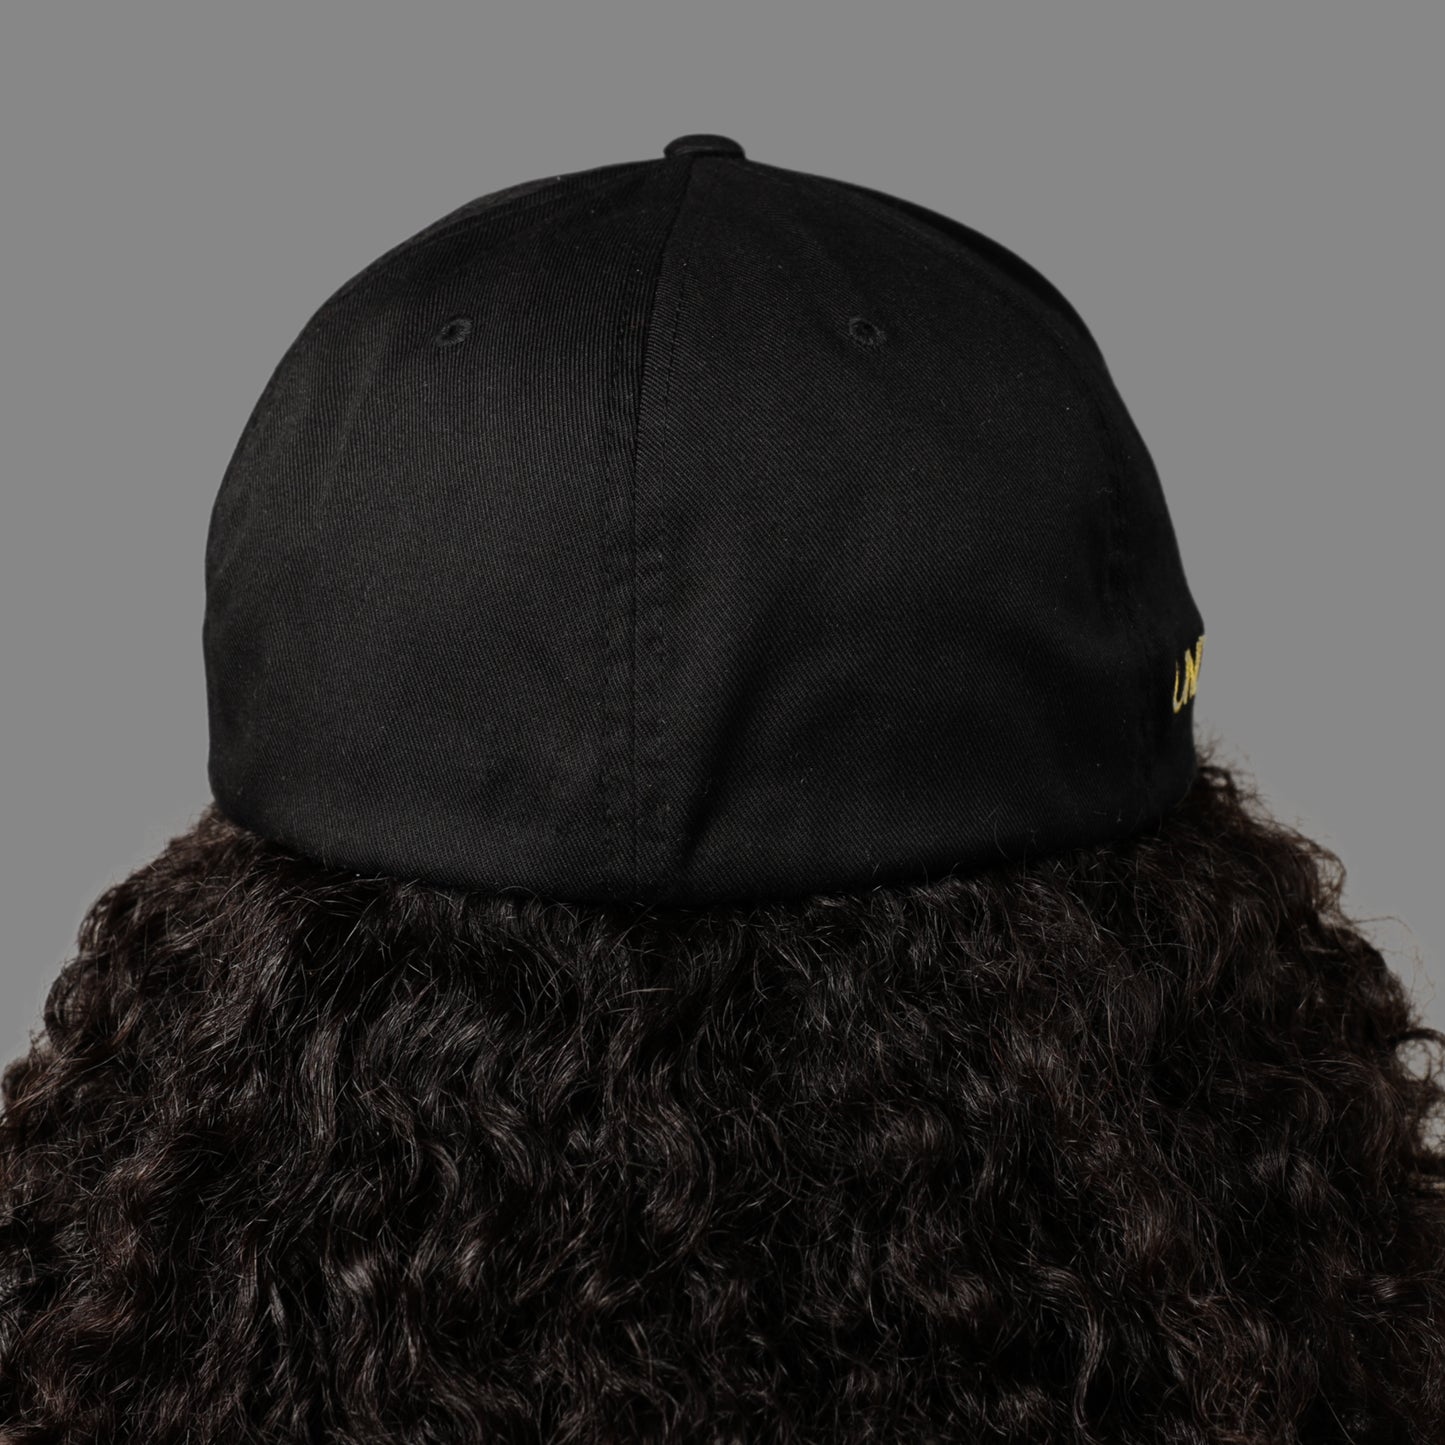 XL - XXL FITTED CAP ( Black & Gold)